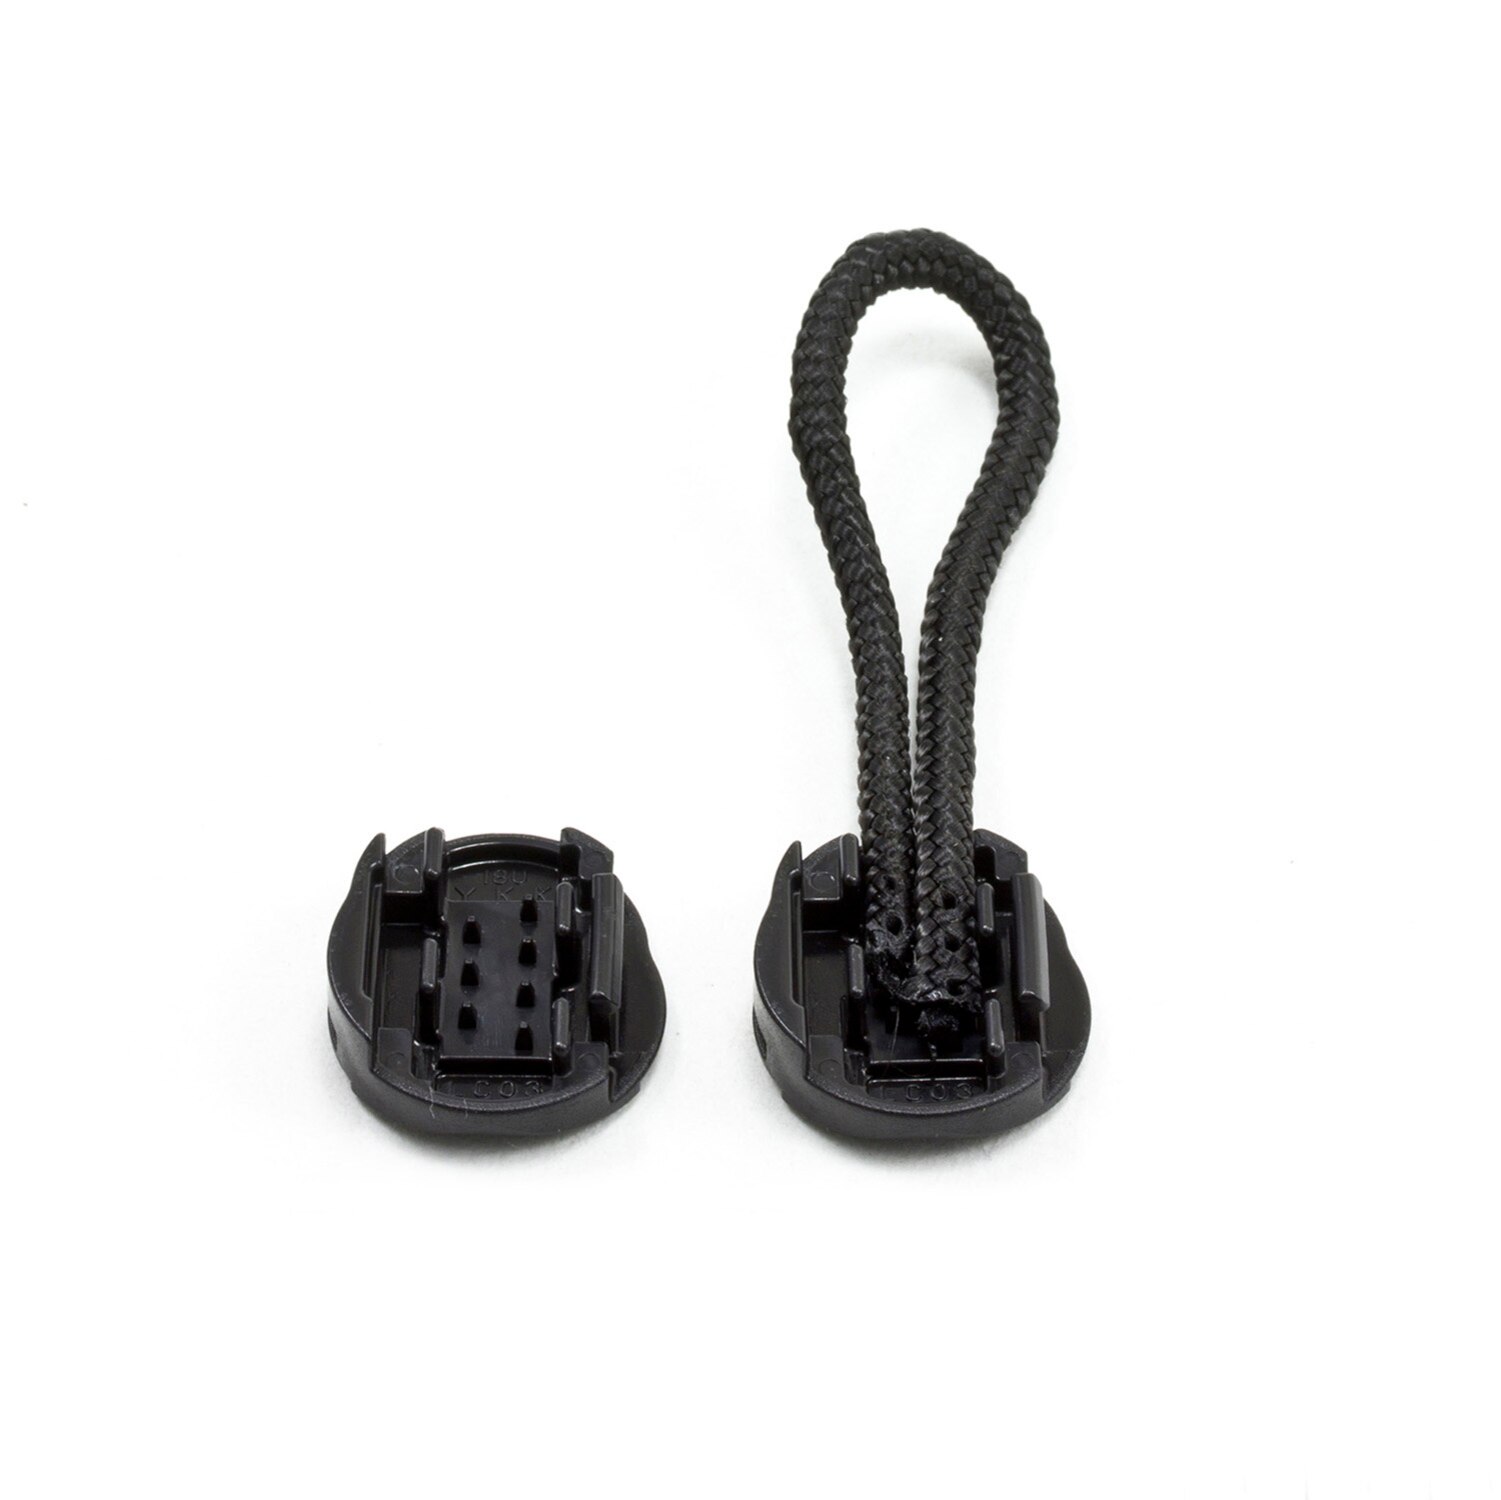 YZSFIRM 10Pcs Replacement Zipper Pulls Black Zipper Pull Cord